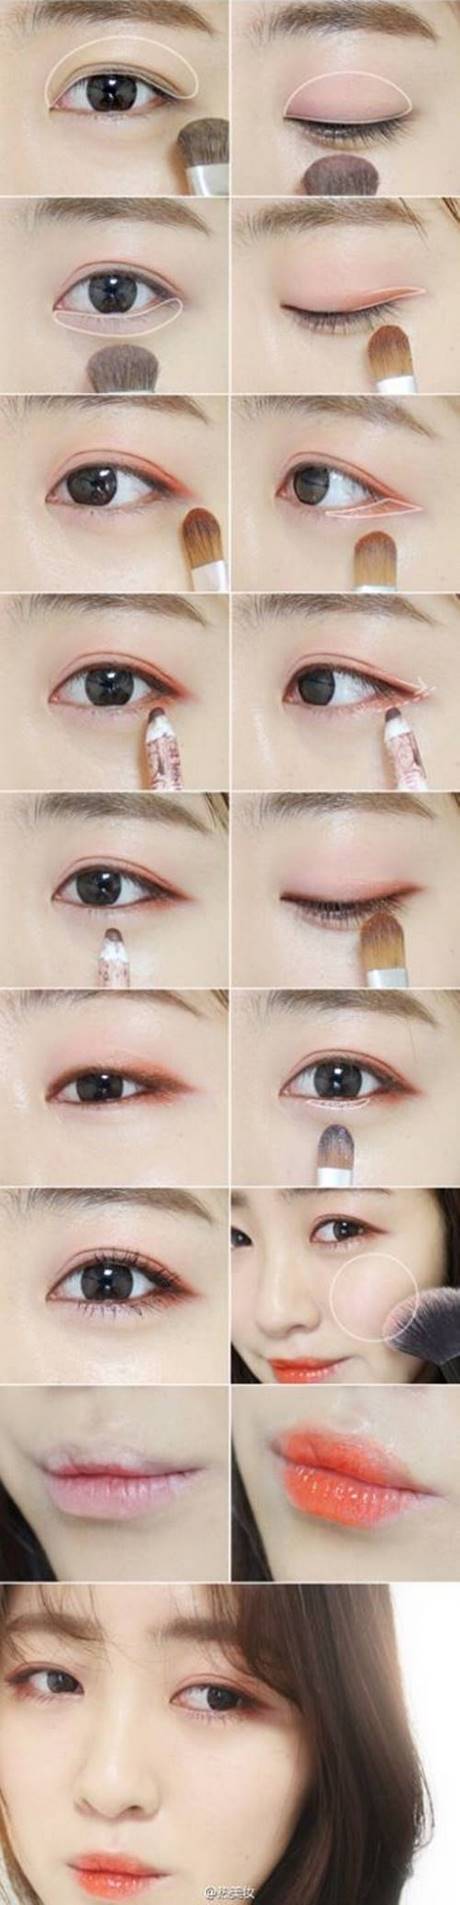 Kpop boy make-up tutorial